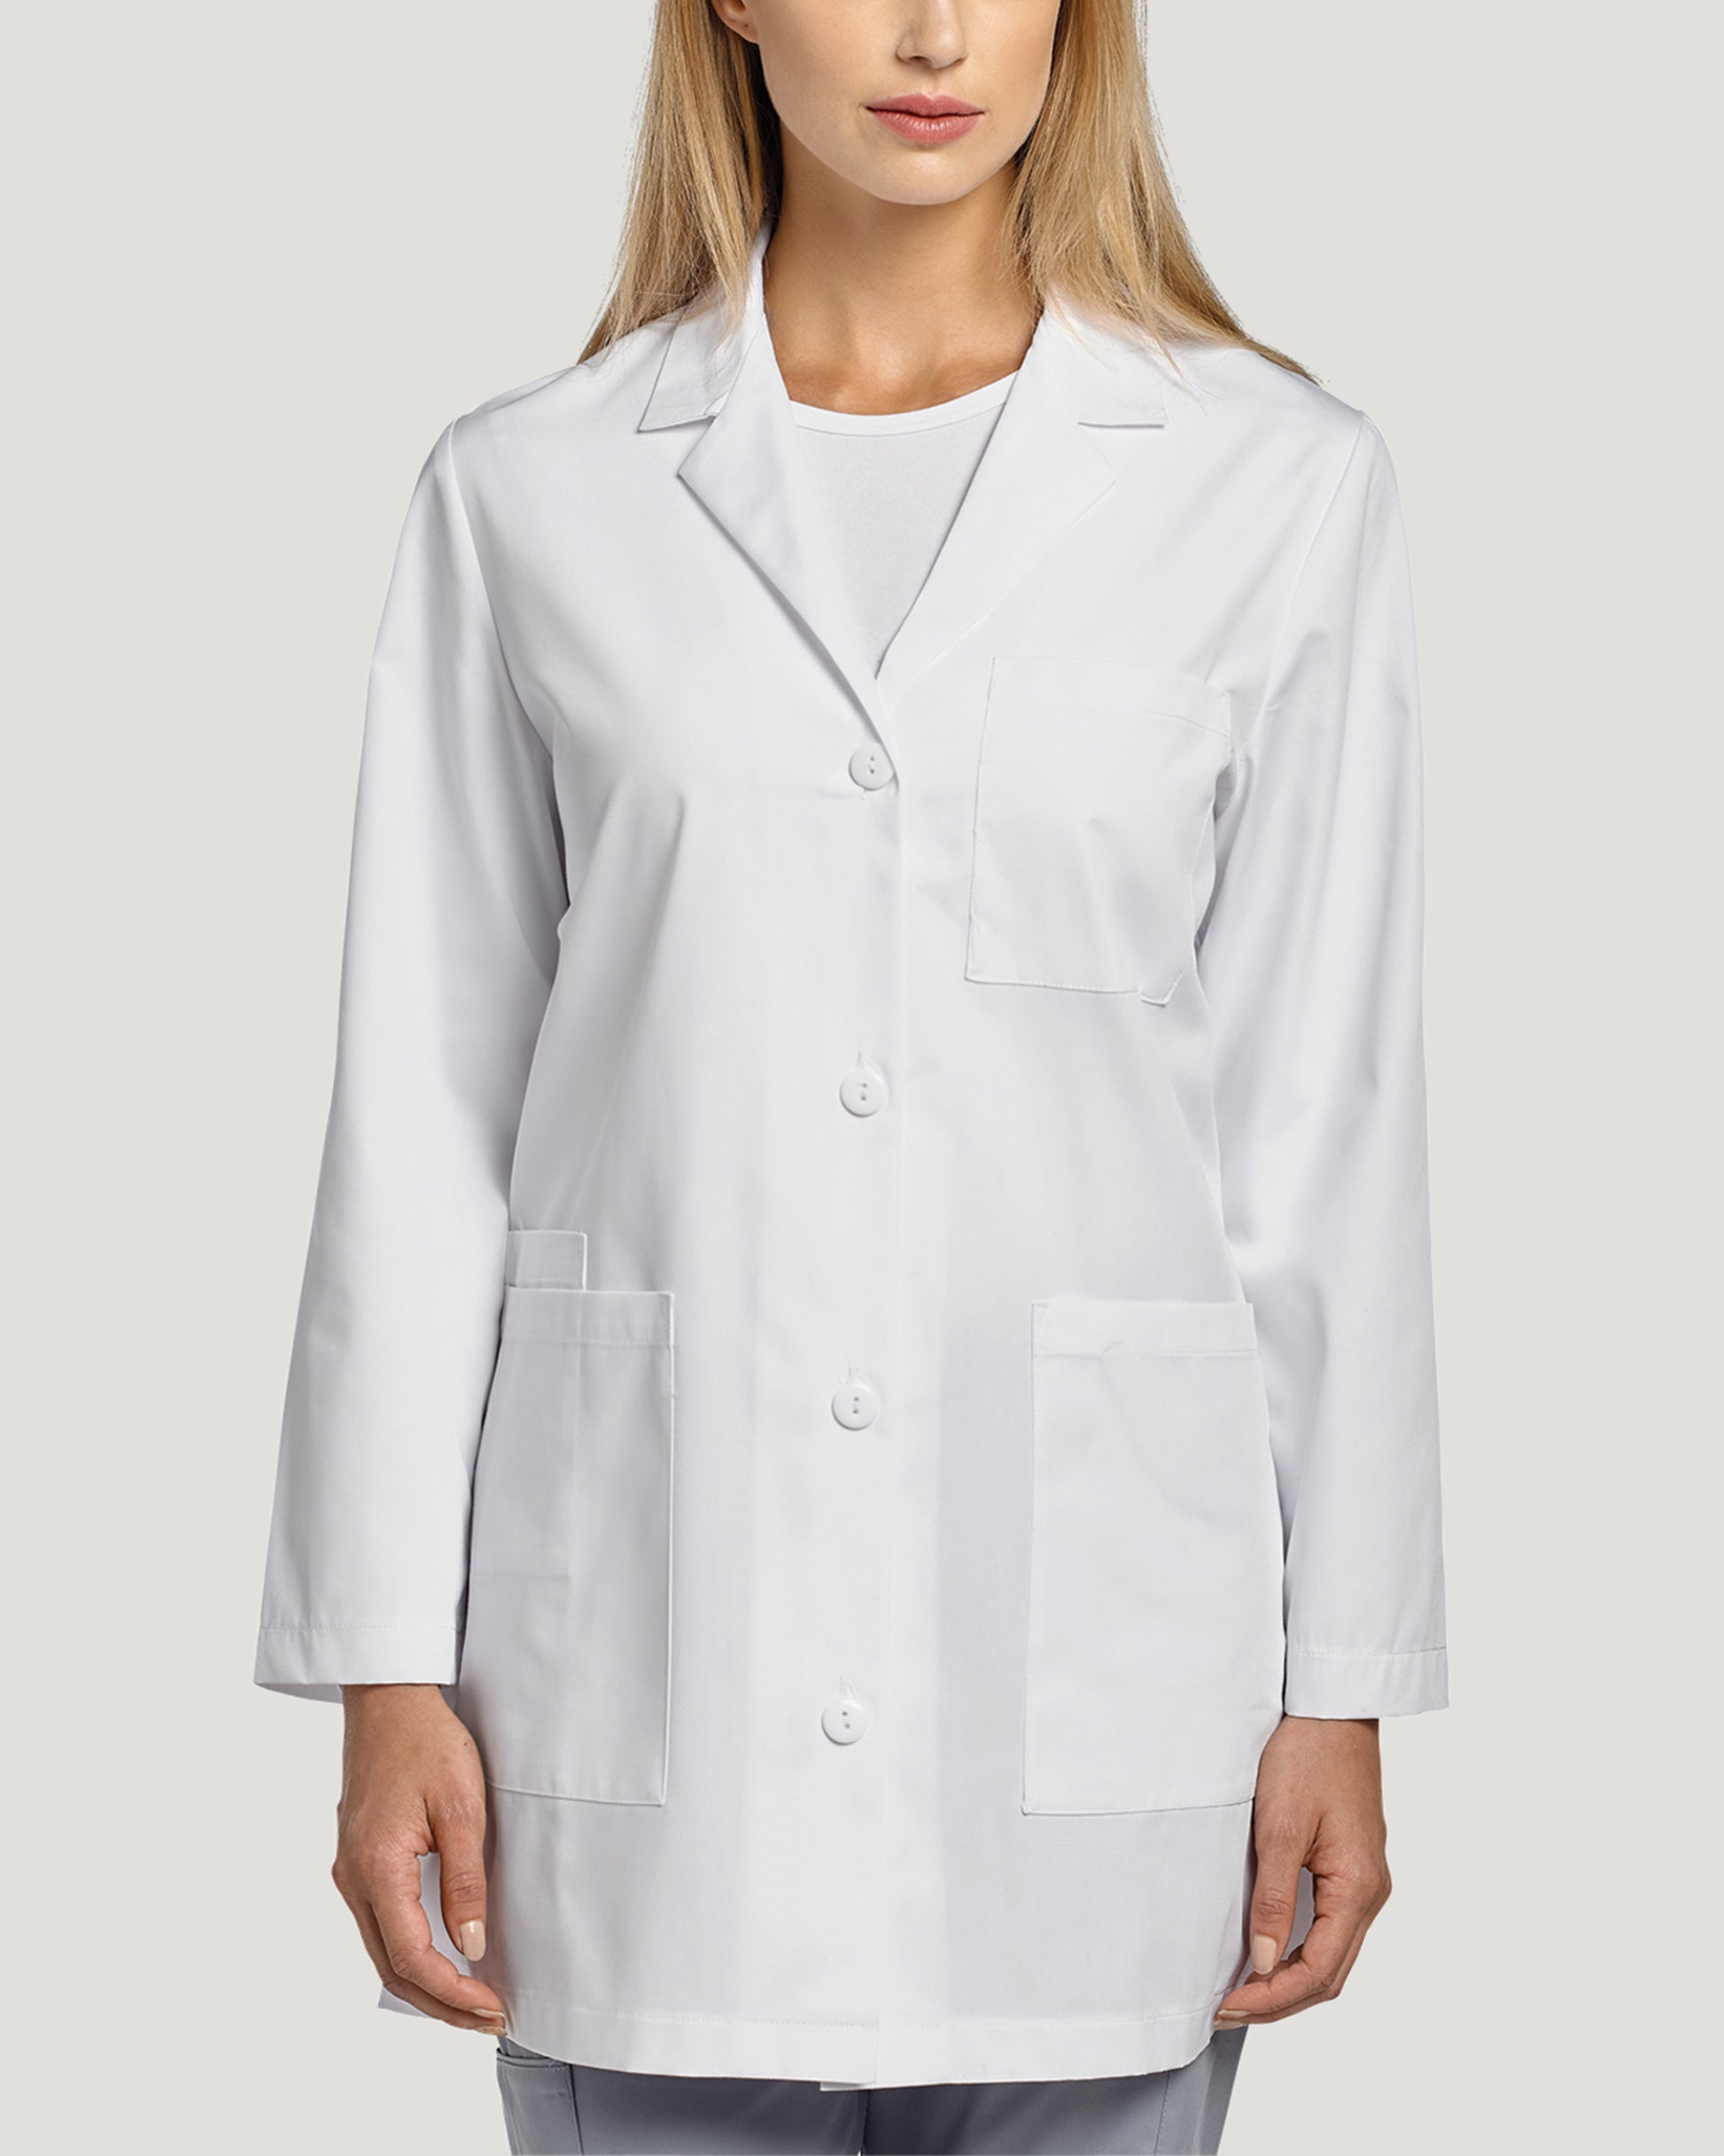 White Cross Cotton Underscrub Longsleeve Shirt – Lasalle Uniform